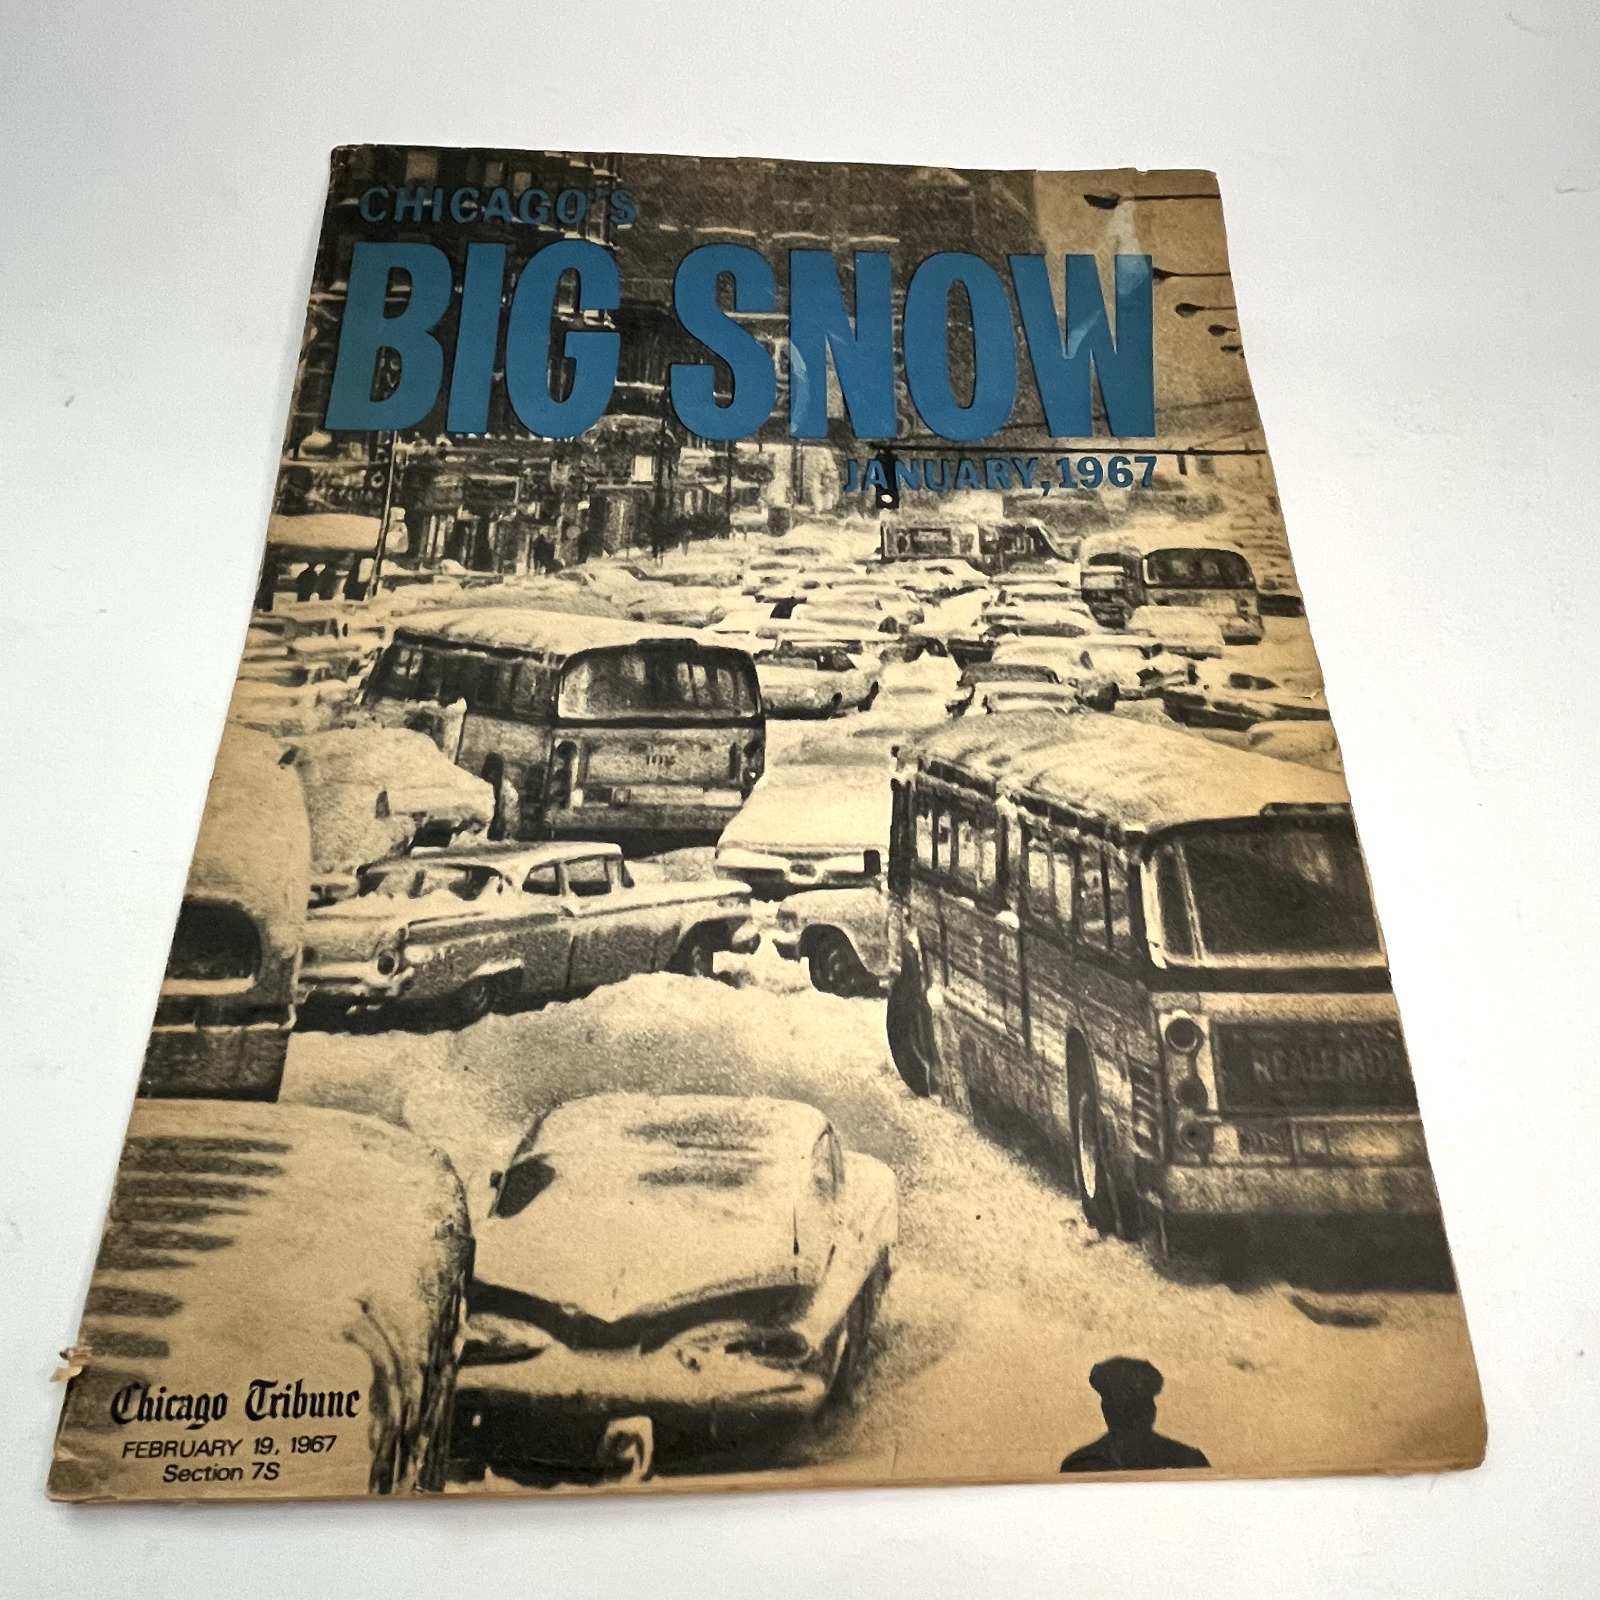 Chicago Tribune “Chicago's Big Snow” February 19, 1967 Section 7S: M